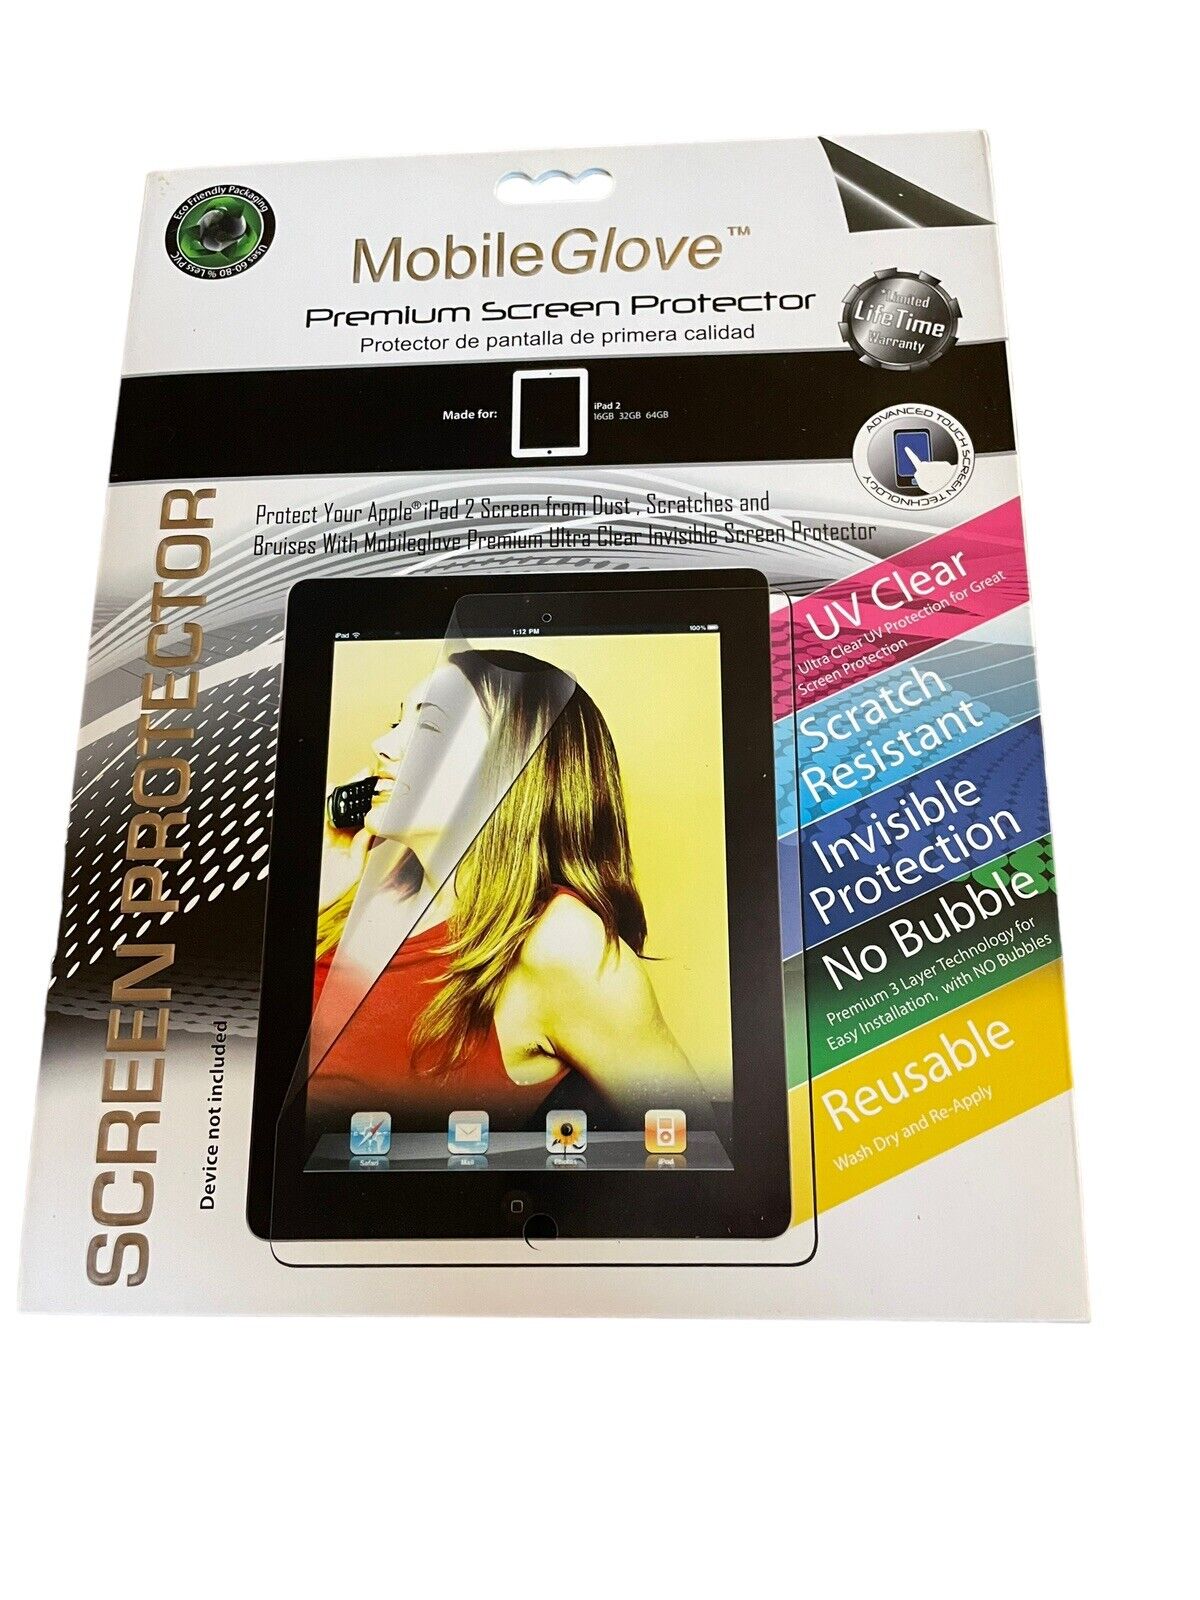 Mobile Glove Premium Screen Protector for iPAD2 NIP - set of 2